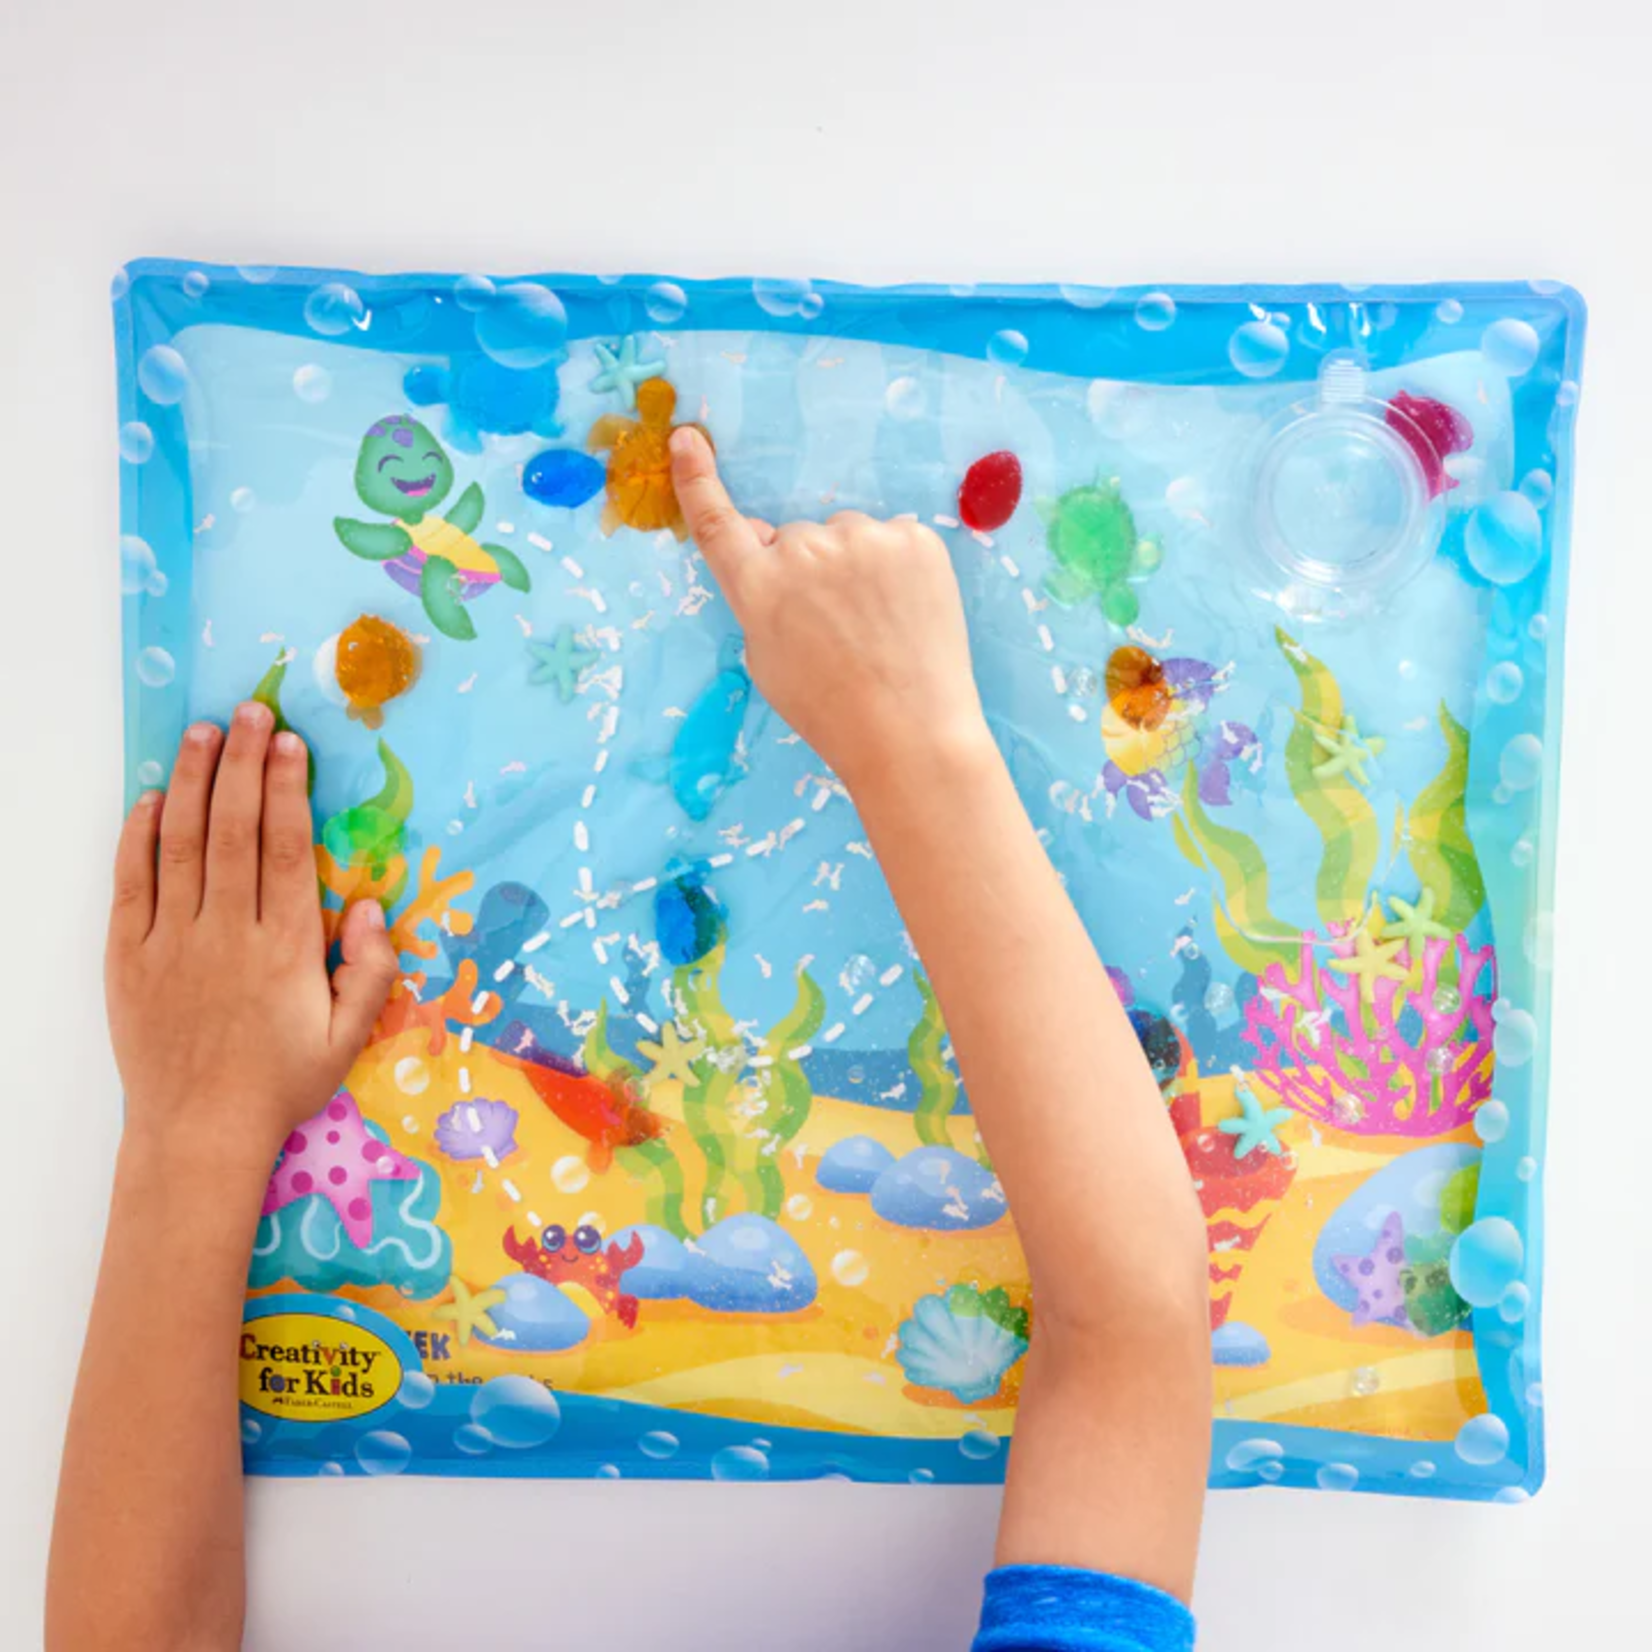 Creativity For Kids Sensory Squish Bag - Ocean Adventure